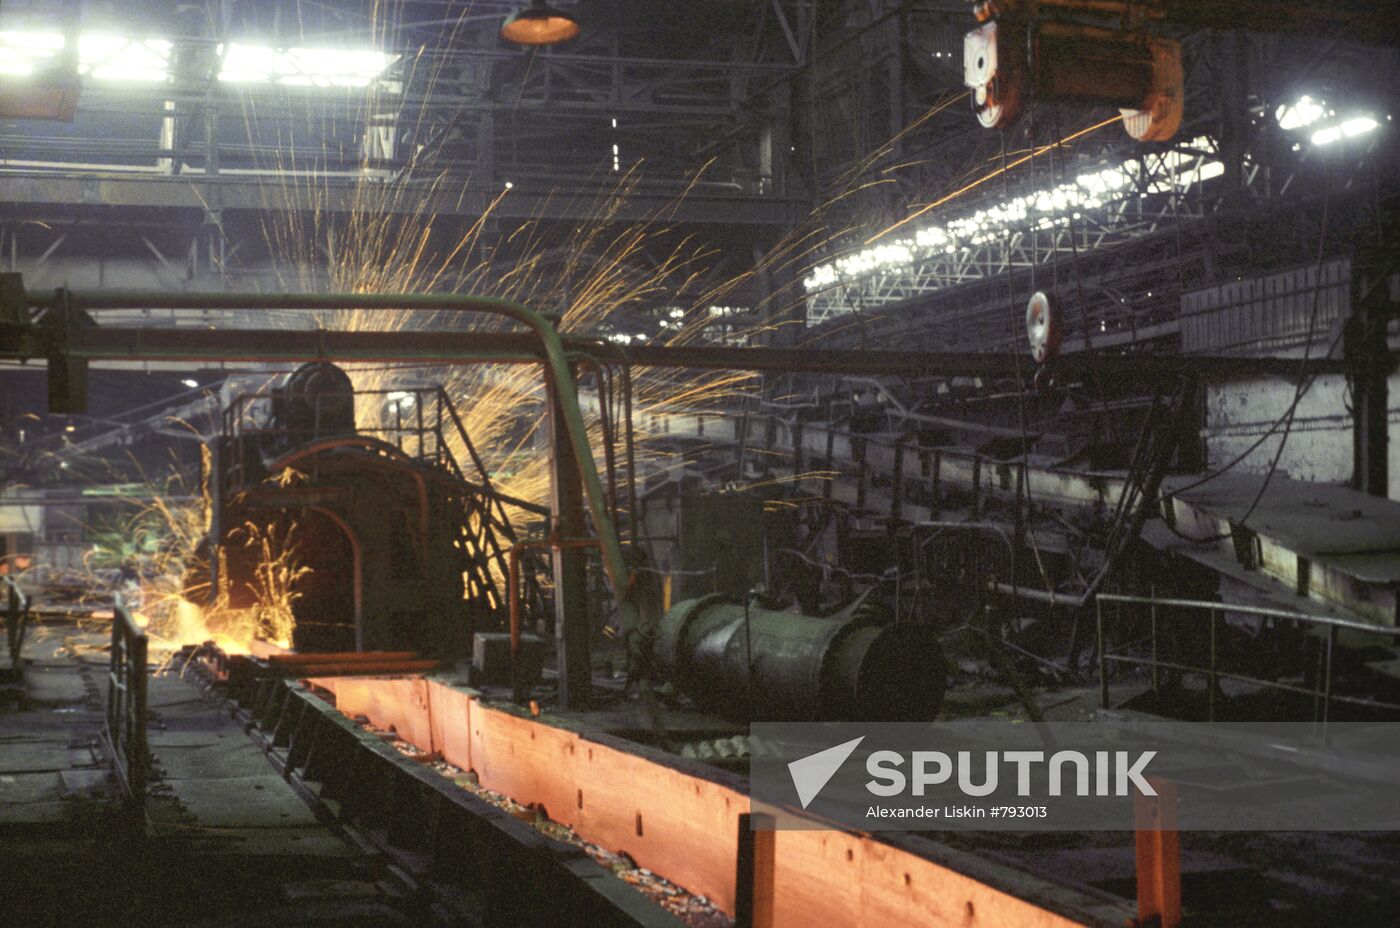 Petrovsky steel plant in Dnepropetrovsk